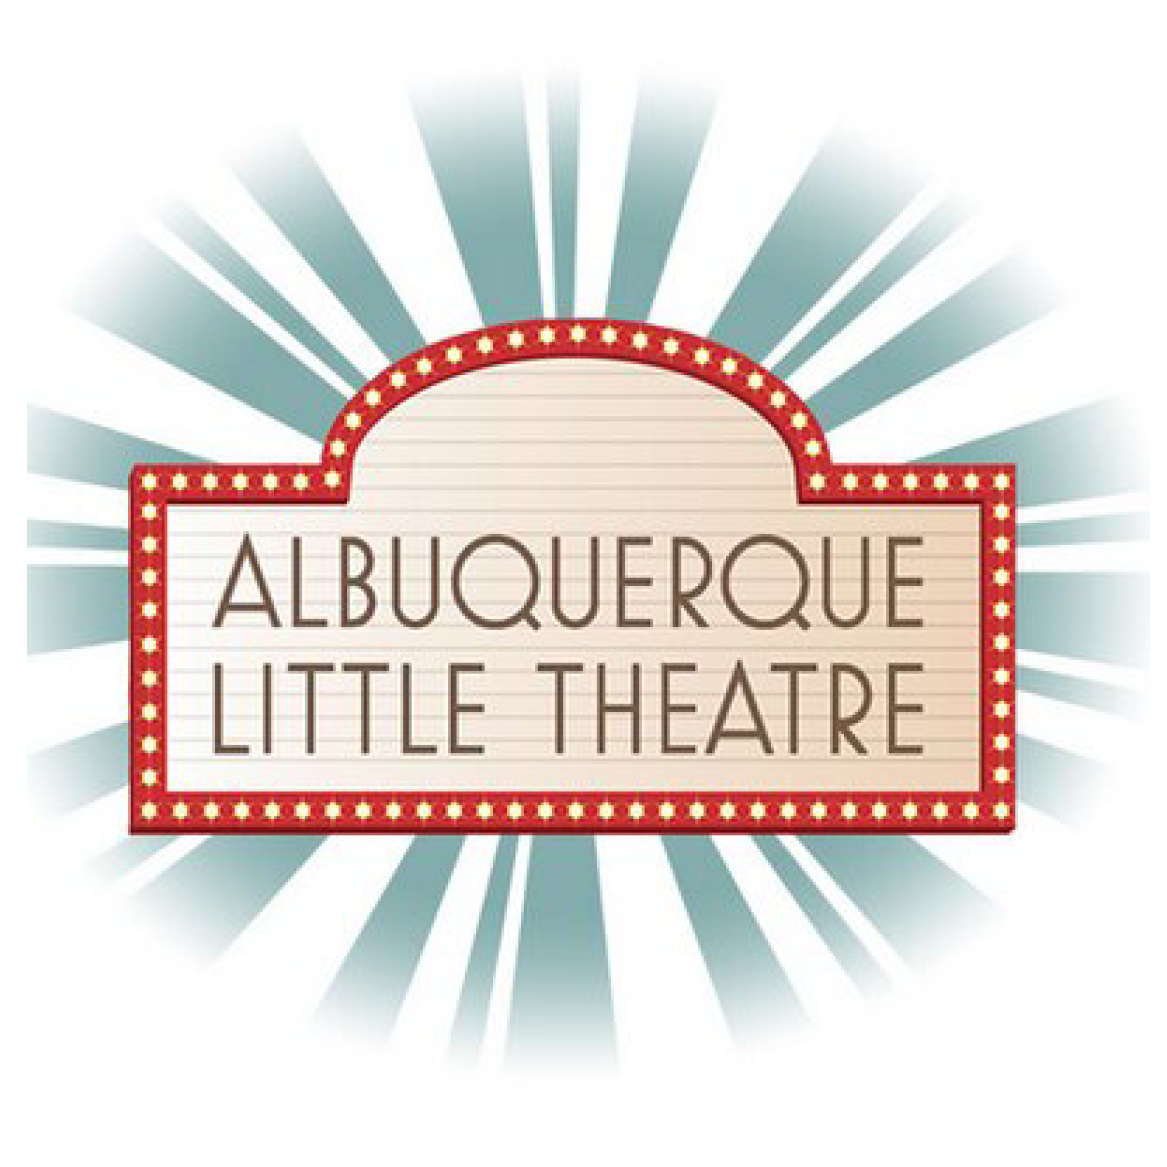 Little theater. Albuquerque. Theatre Camp. Welcome to Albuquerque.